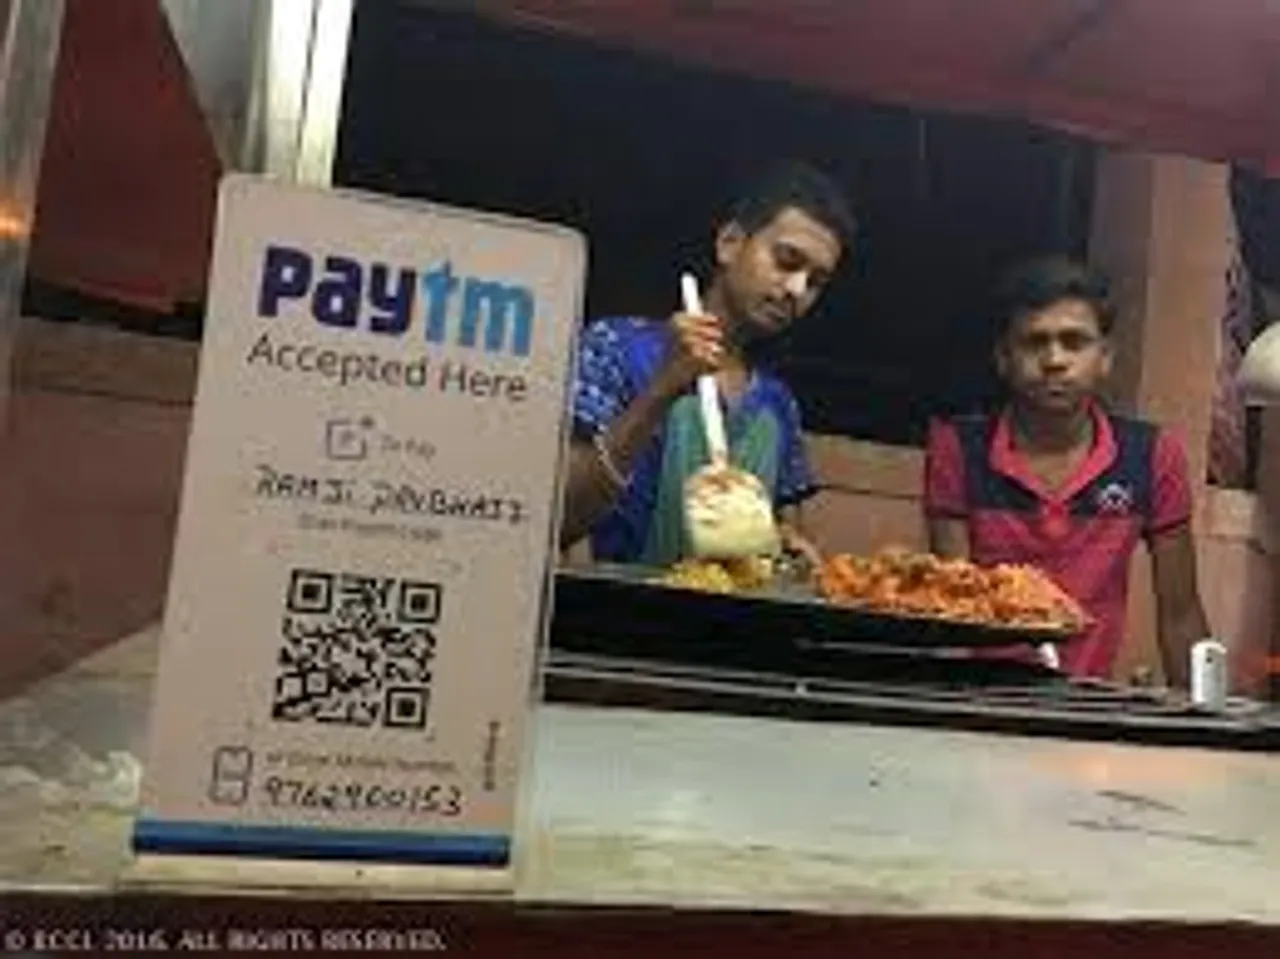 Paytm powering over 35 lakh small merchants